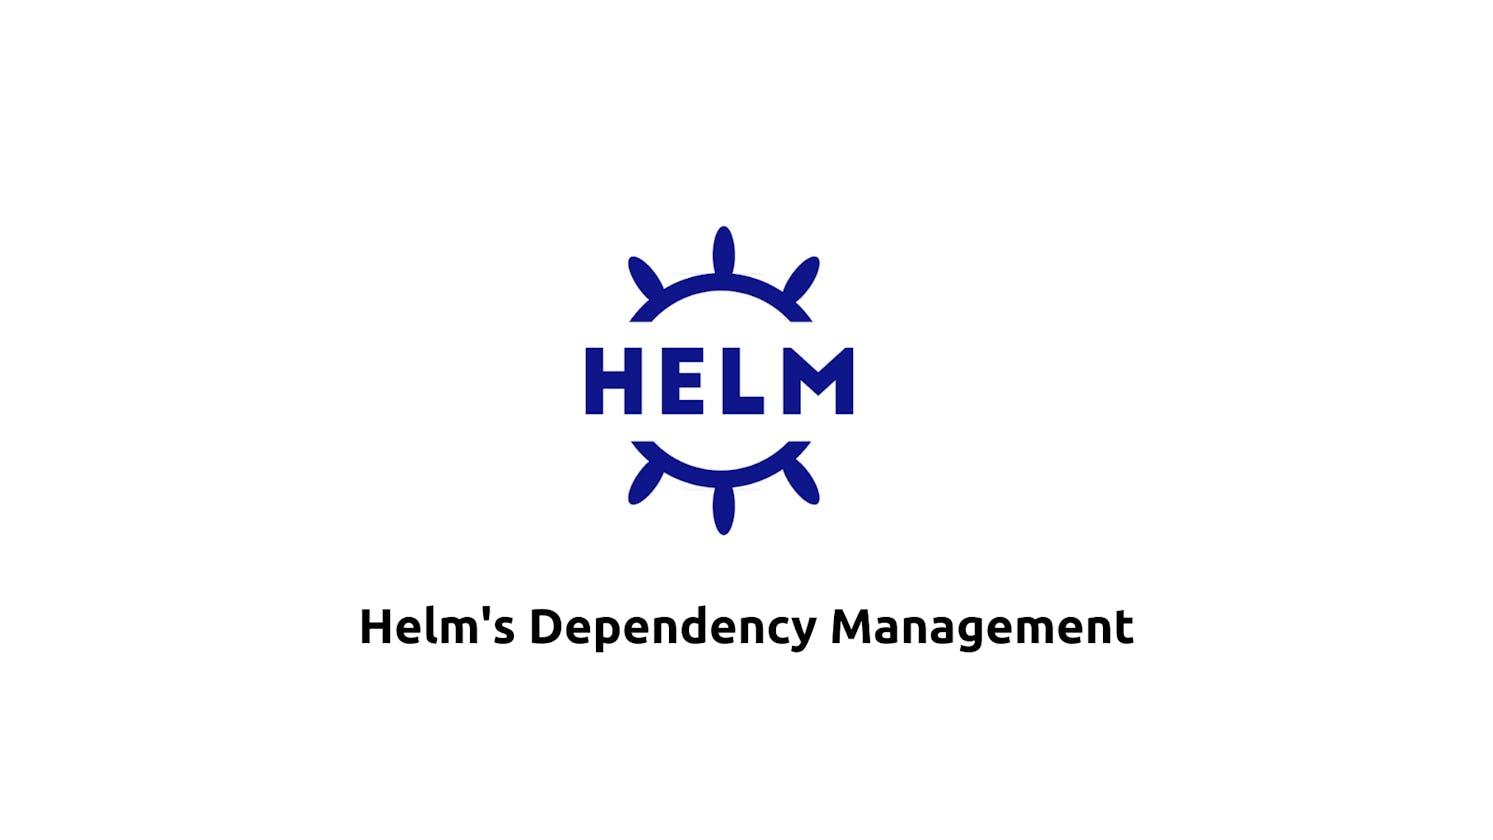 Helm's Dependency Management